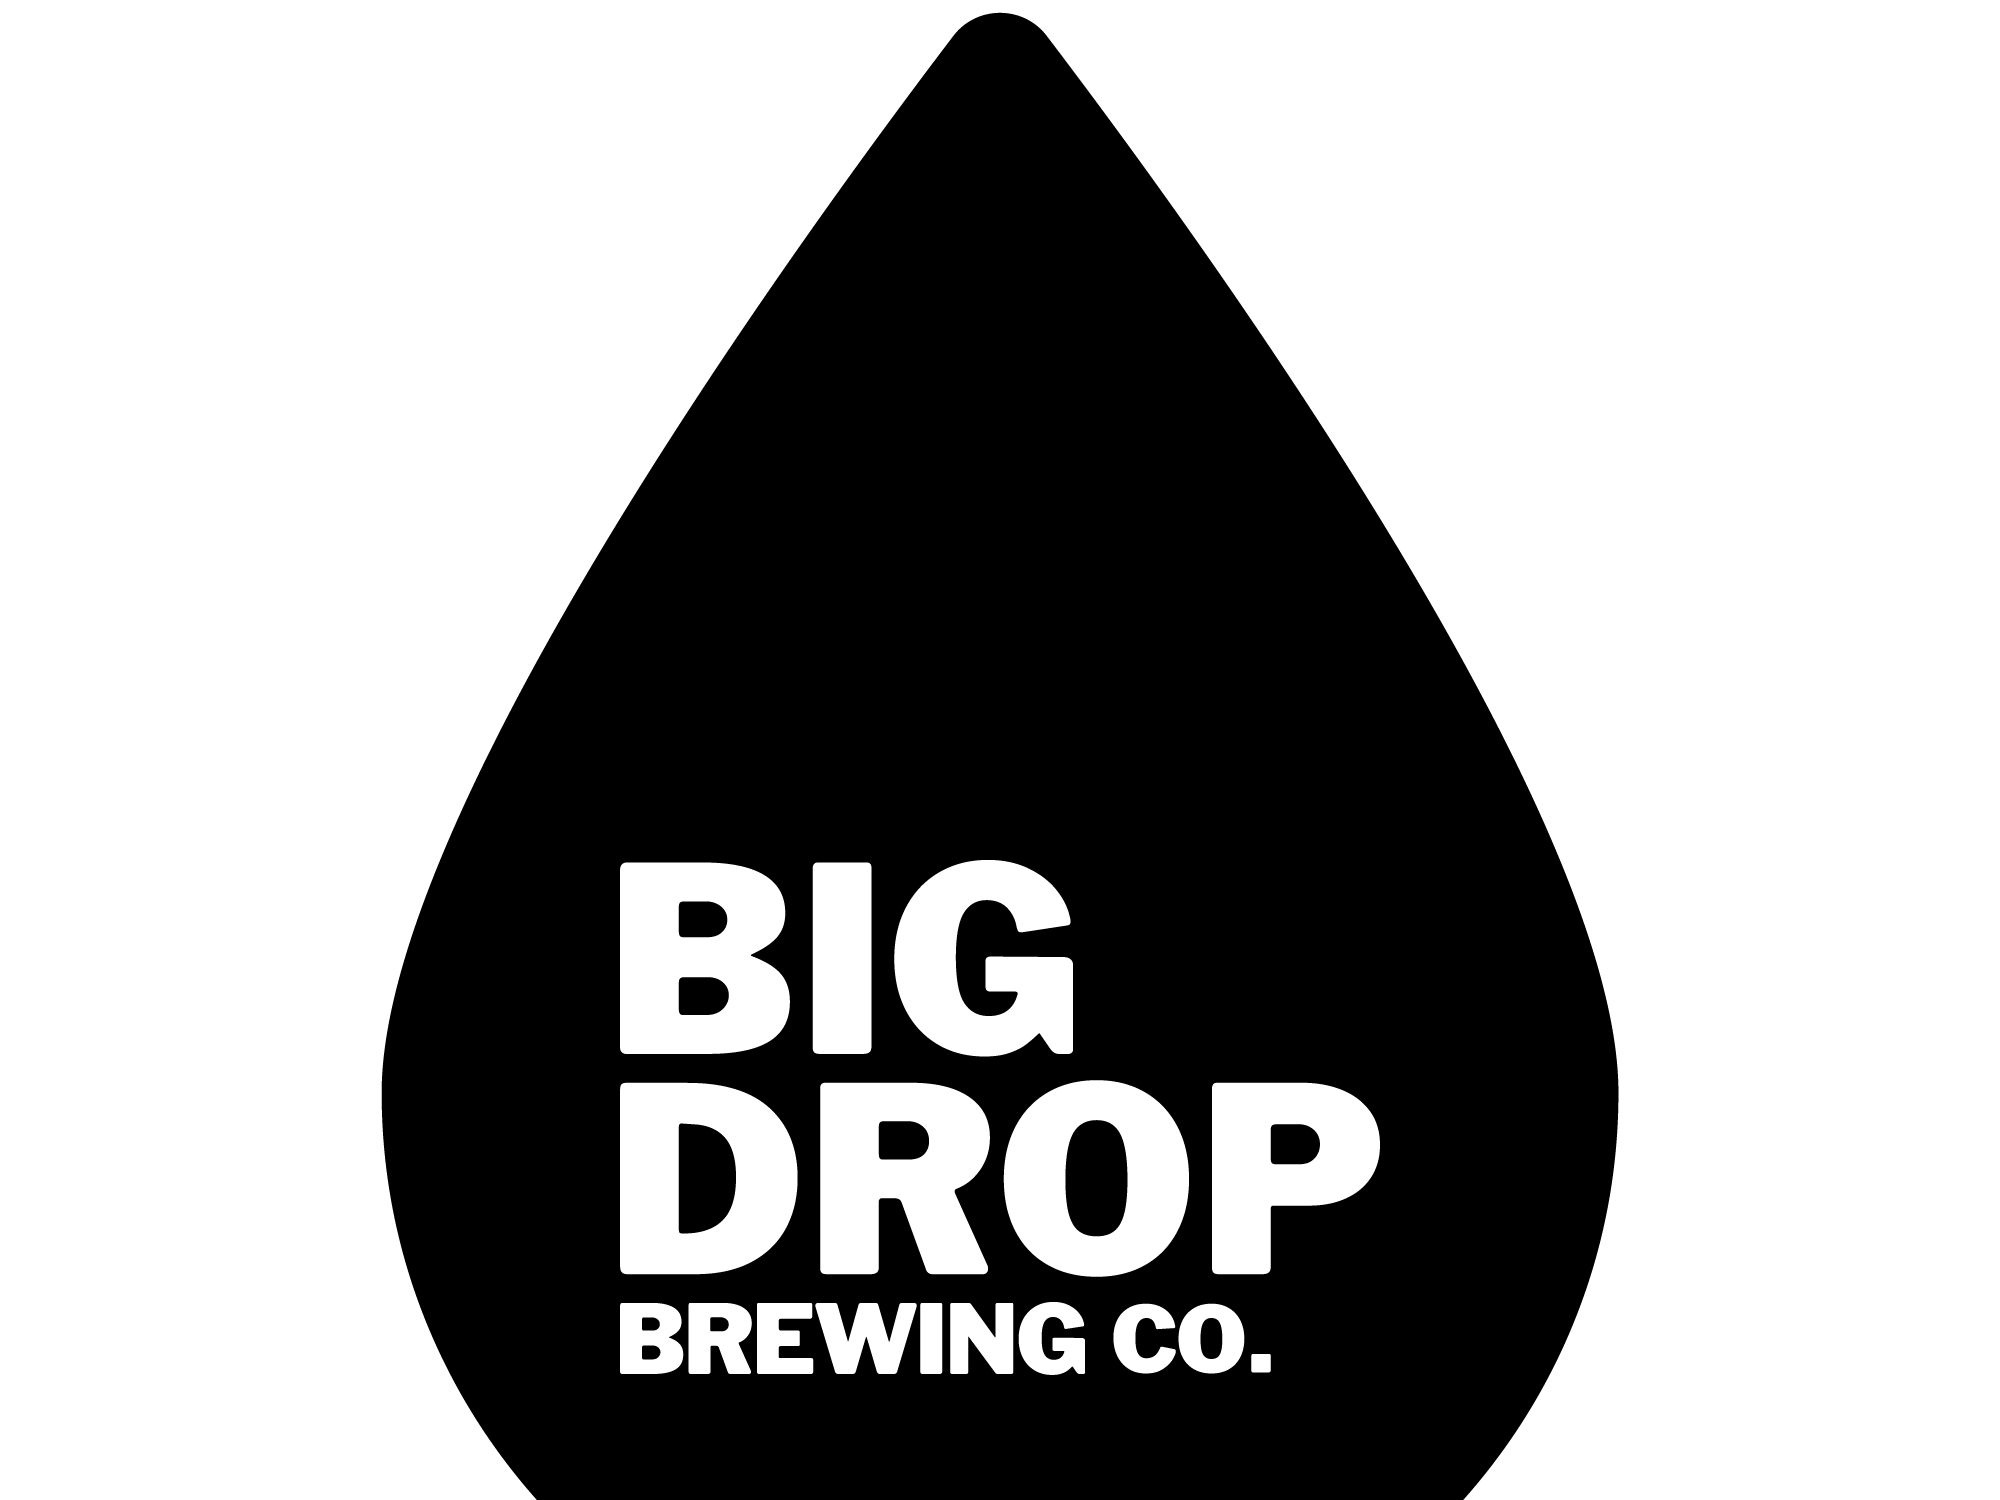 Big Drop Brewing Co brand logo